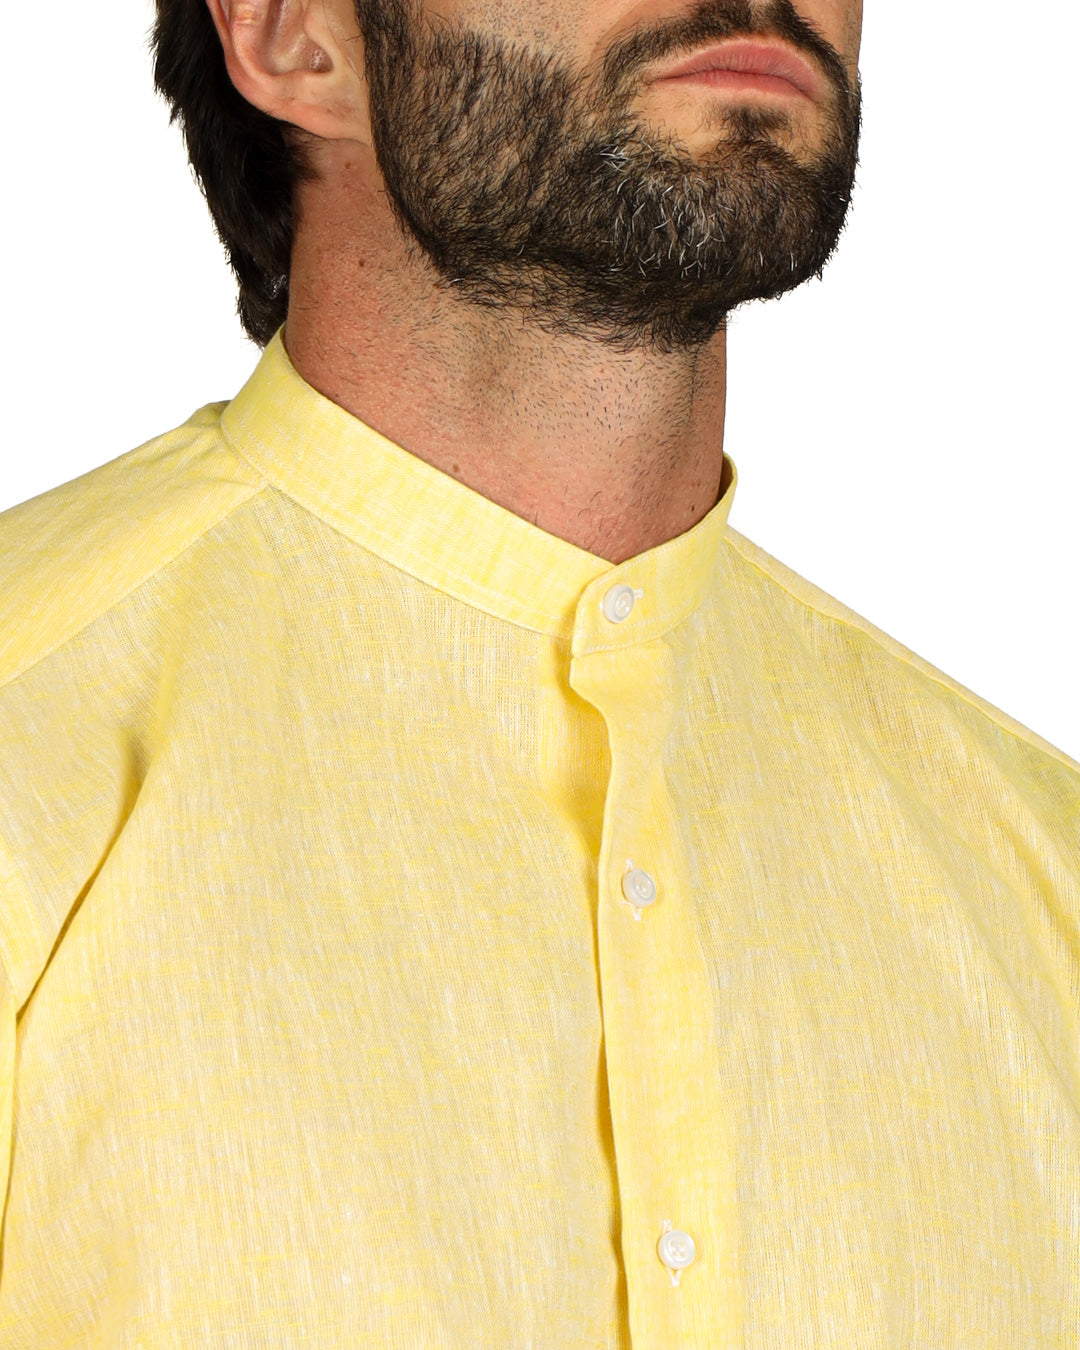 Positano - Yellow linen Korean shirt